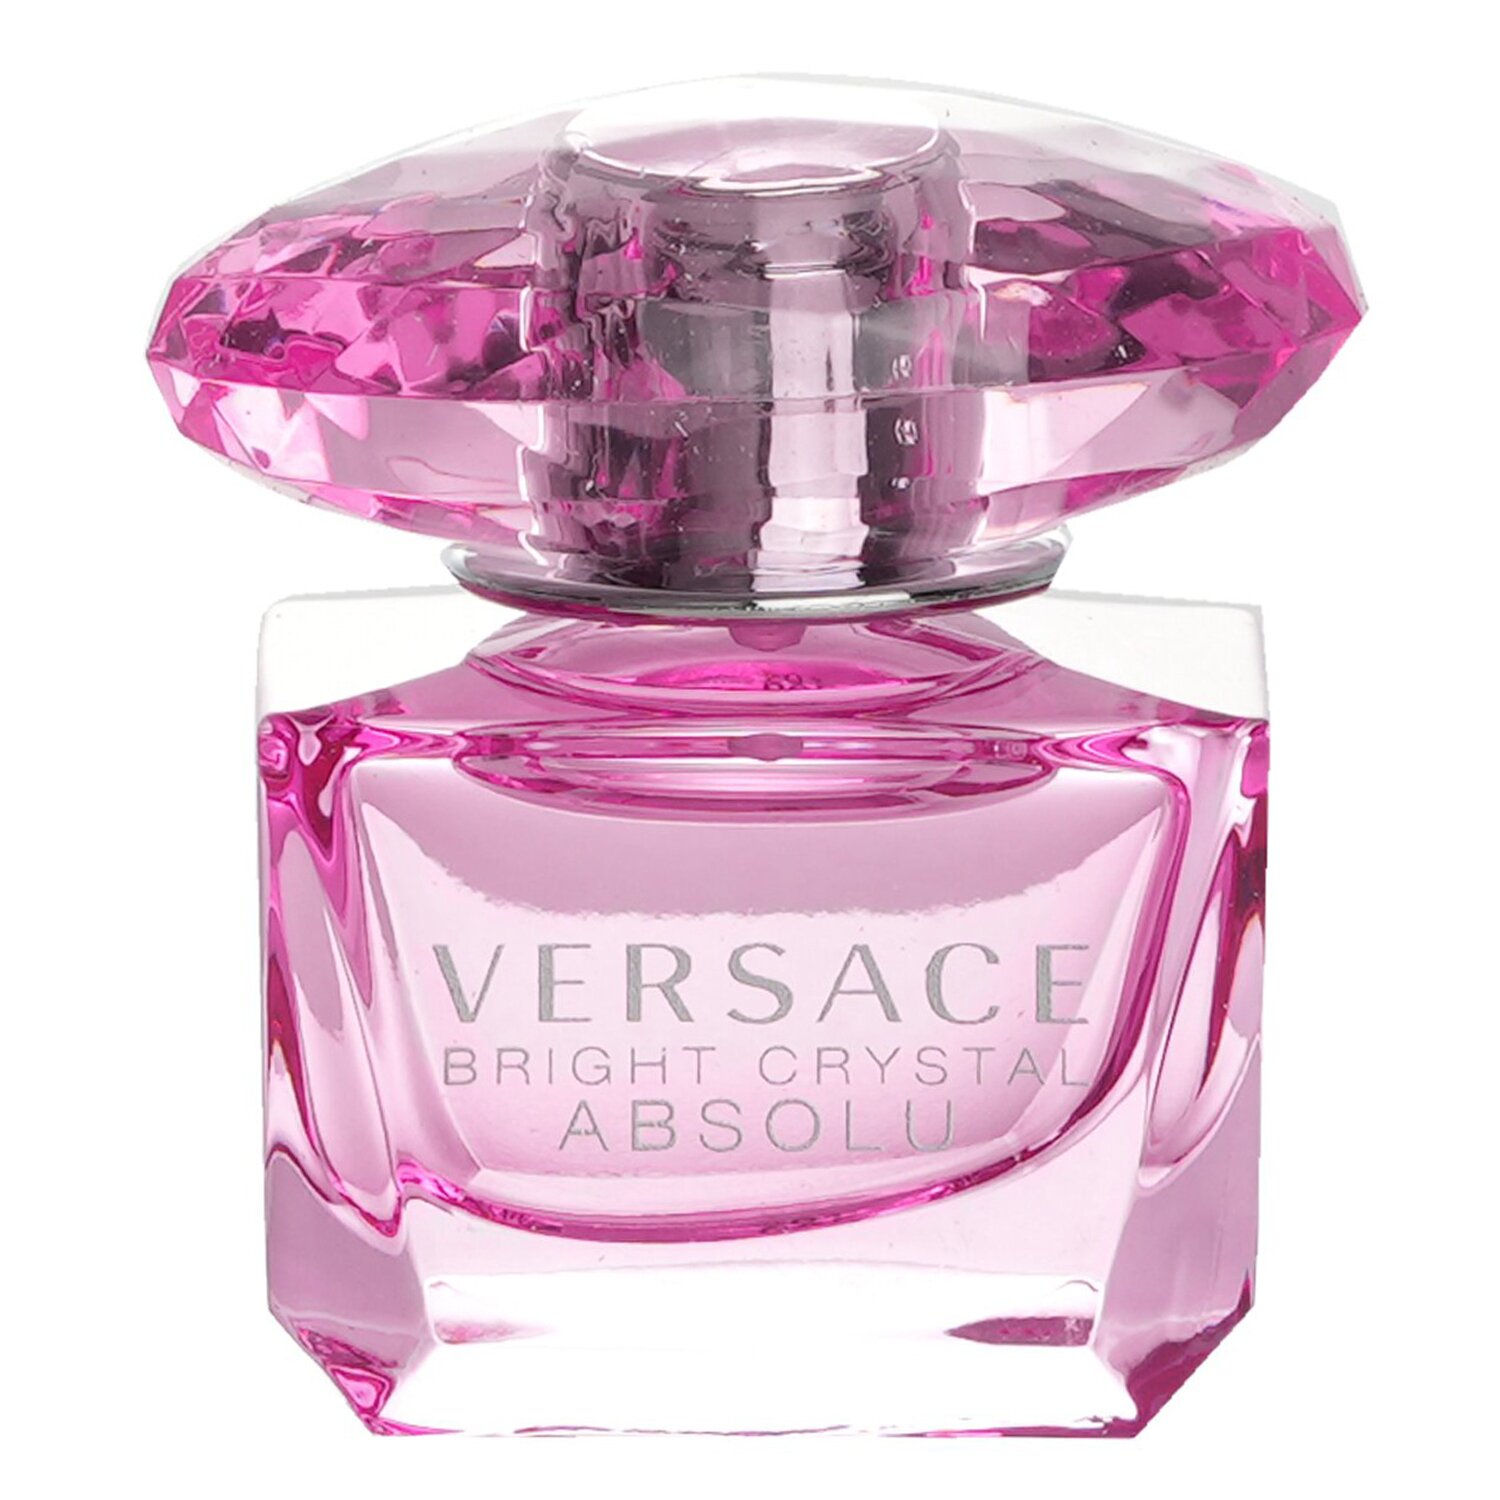 Versace Bright Crystal Absolu Eau De Parfum (Miniature) 5ml/0.17oz